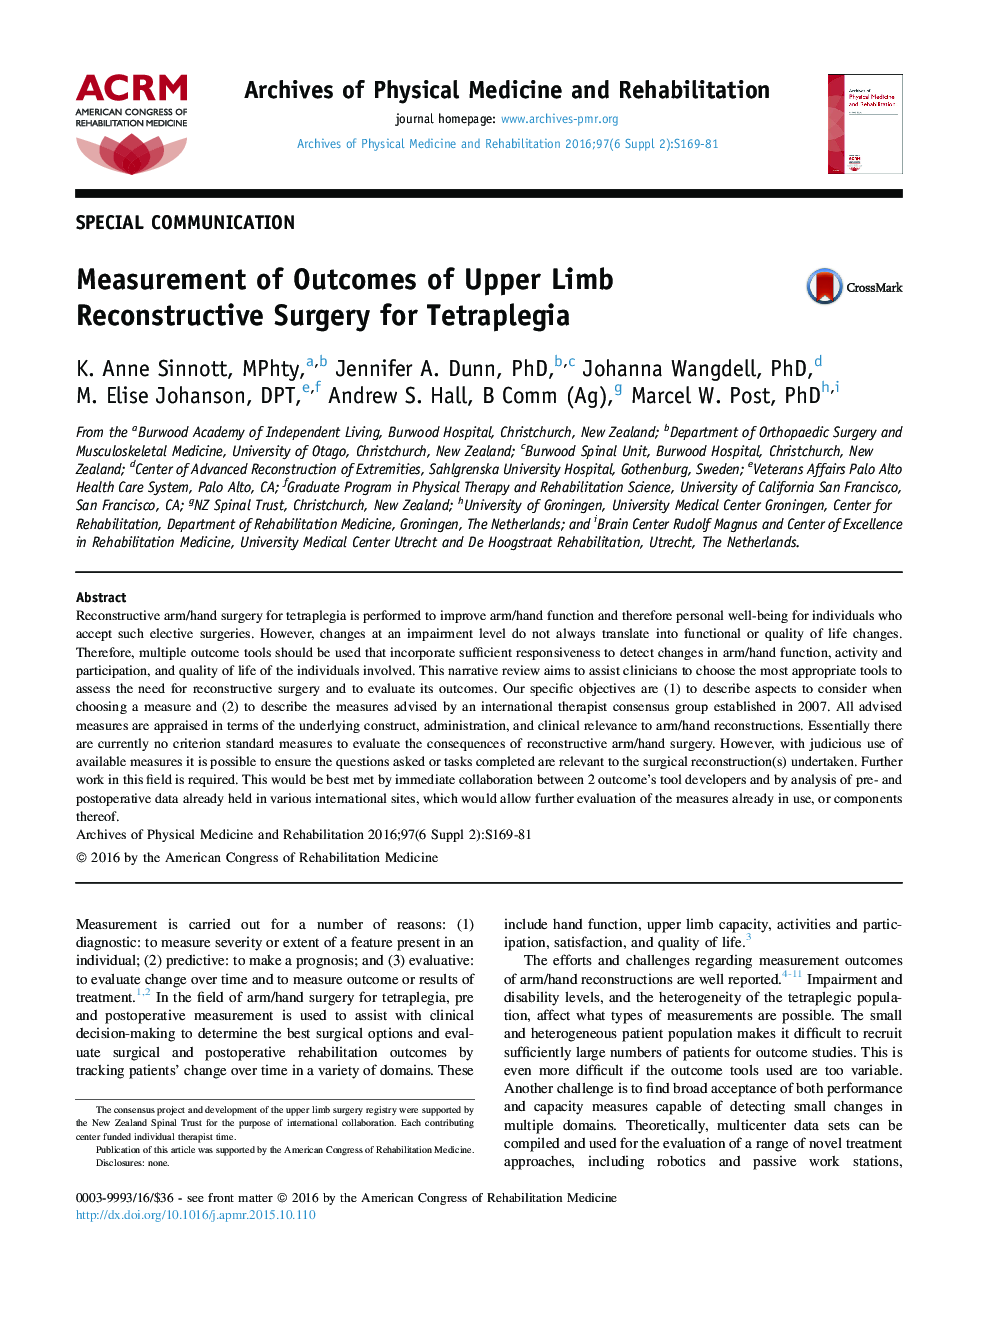 Measurement of Outcomes of Upper Limb Reconstructive Surgery for Tetraplegia 